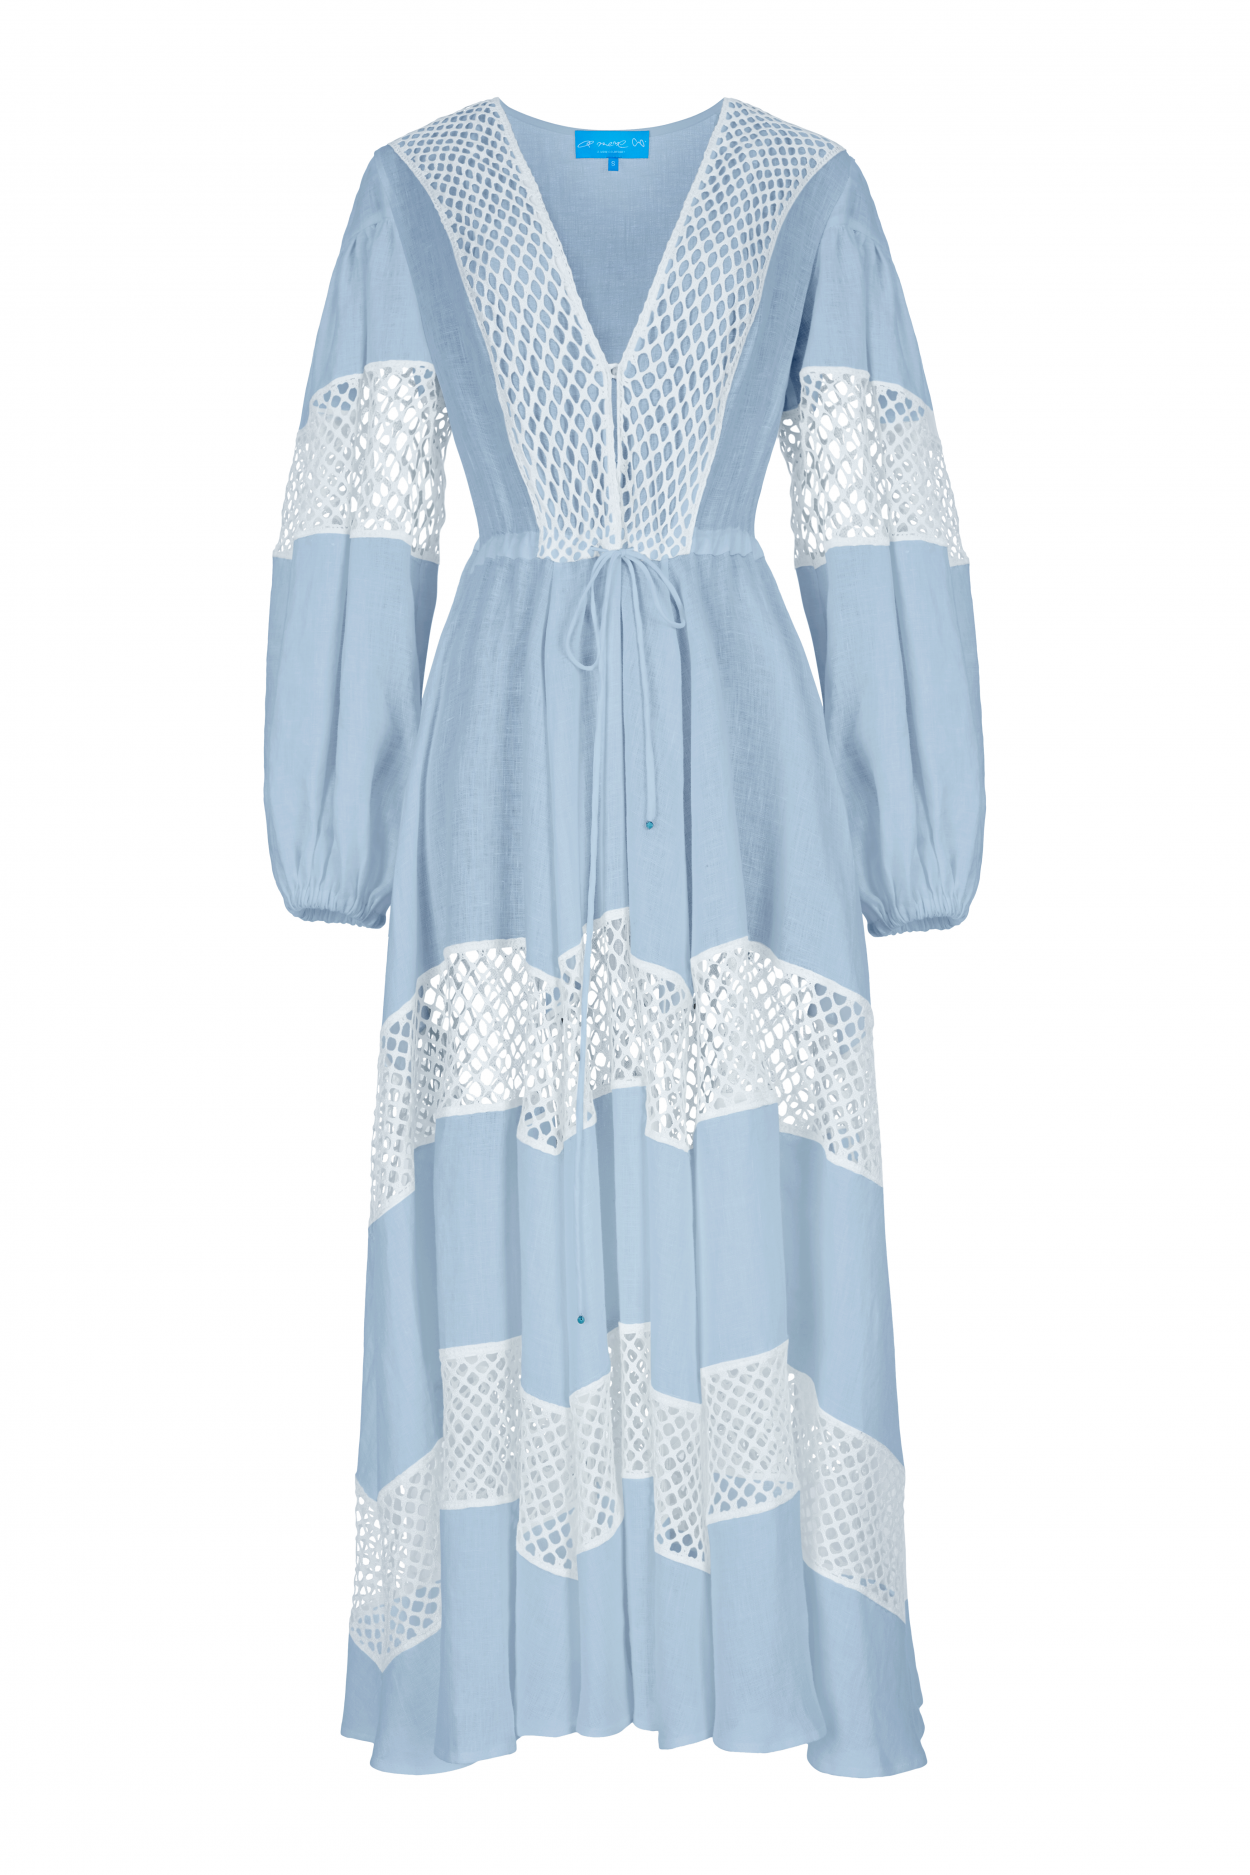 Gustavia Maxi Dress - A-MERE-CO| Official Online Shop | Womenswear